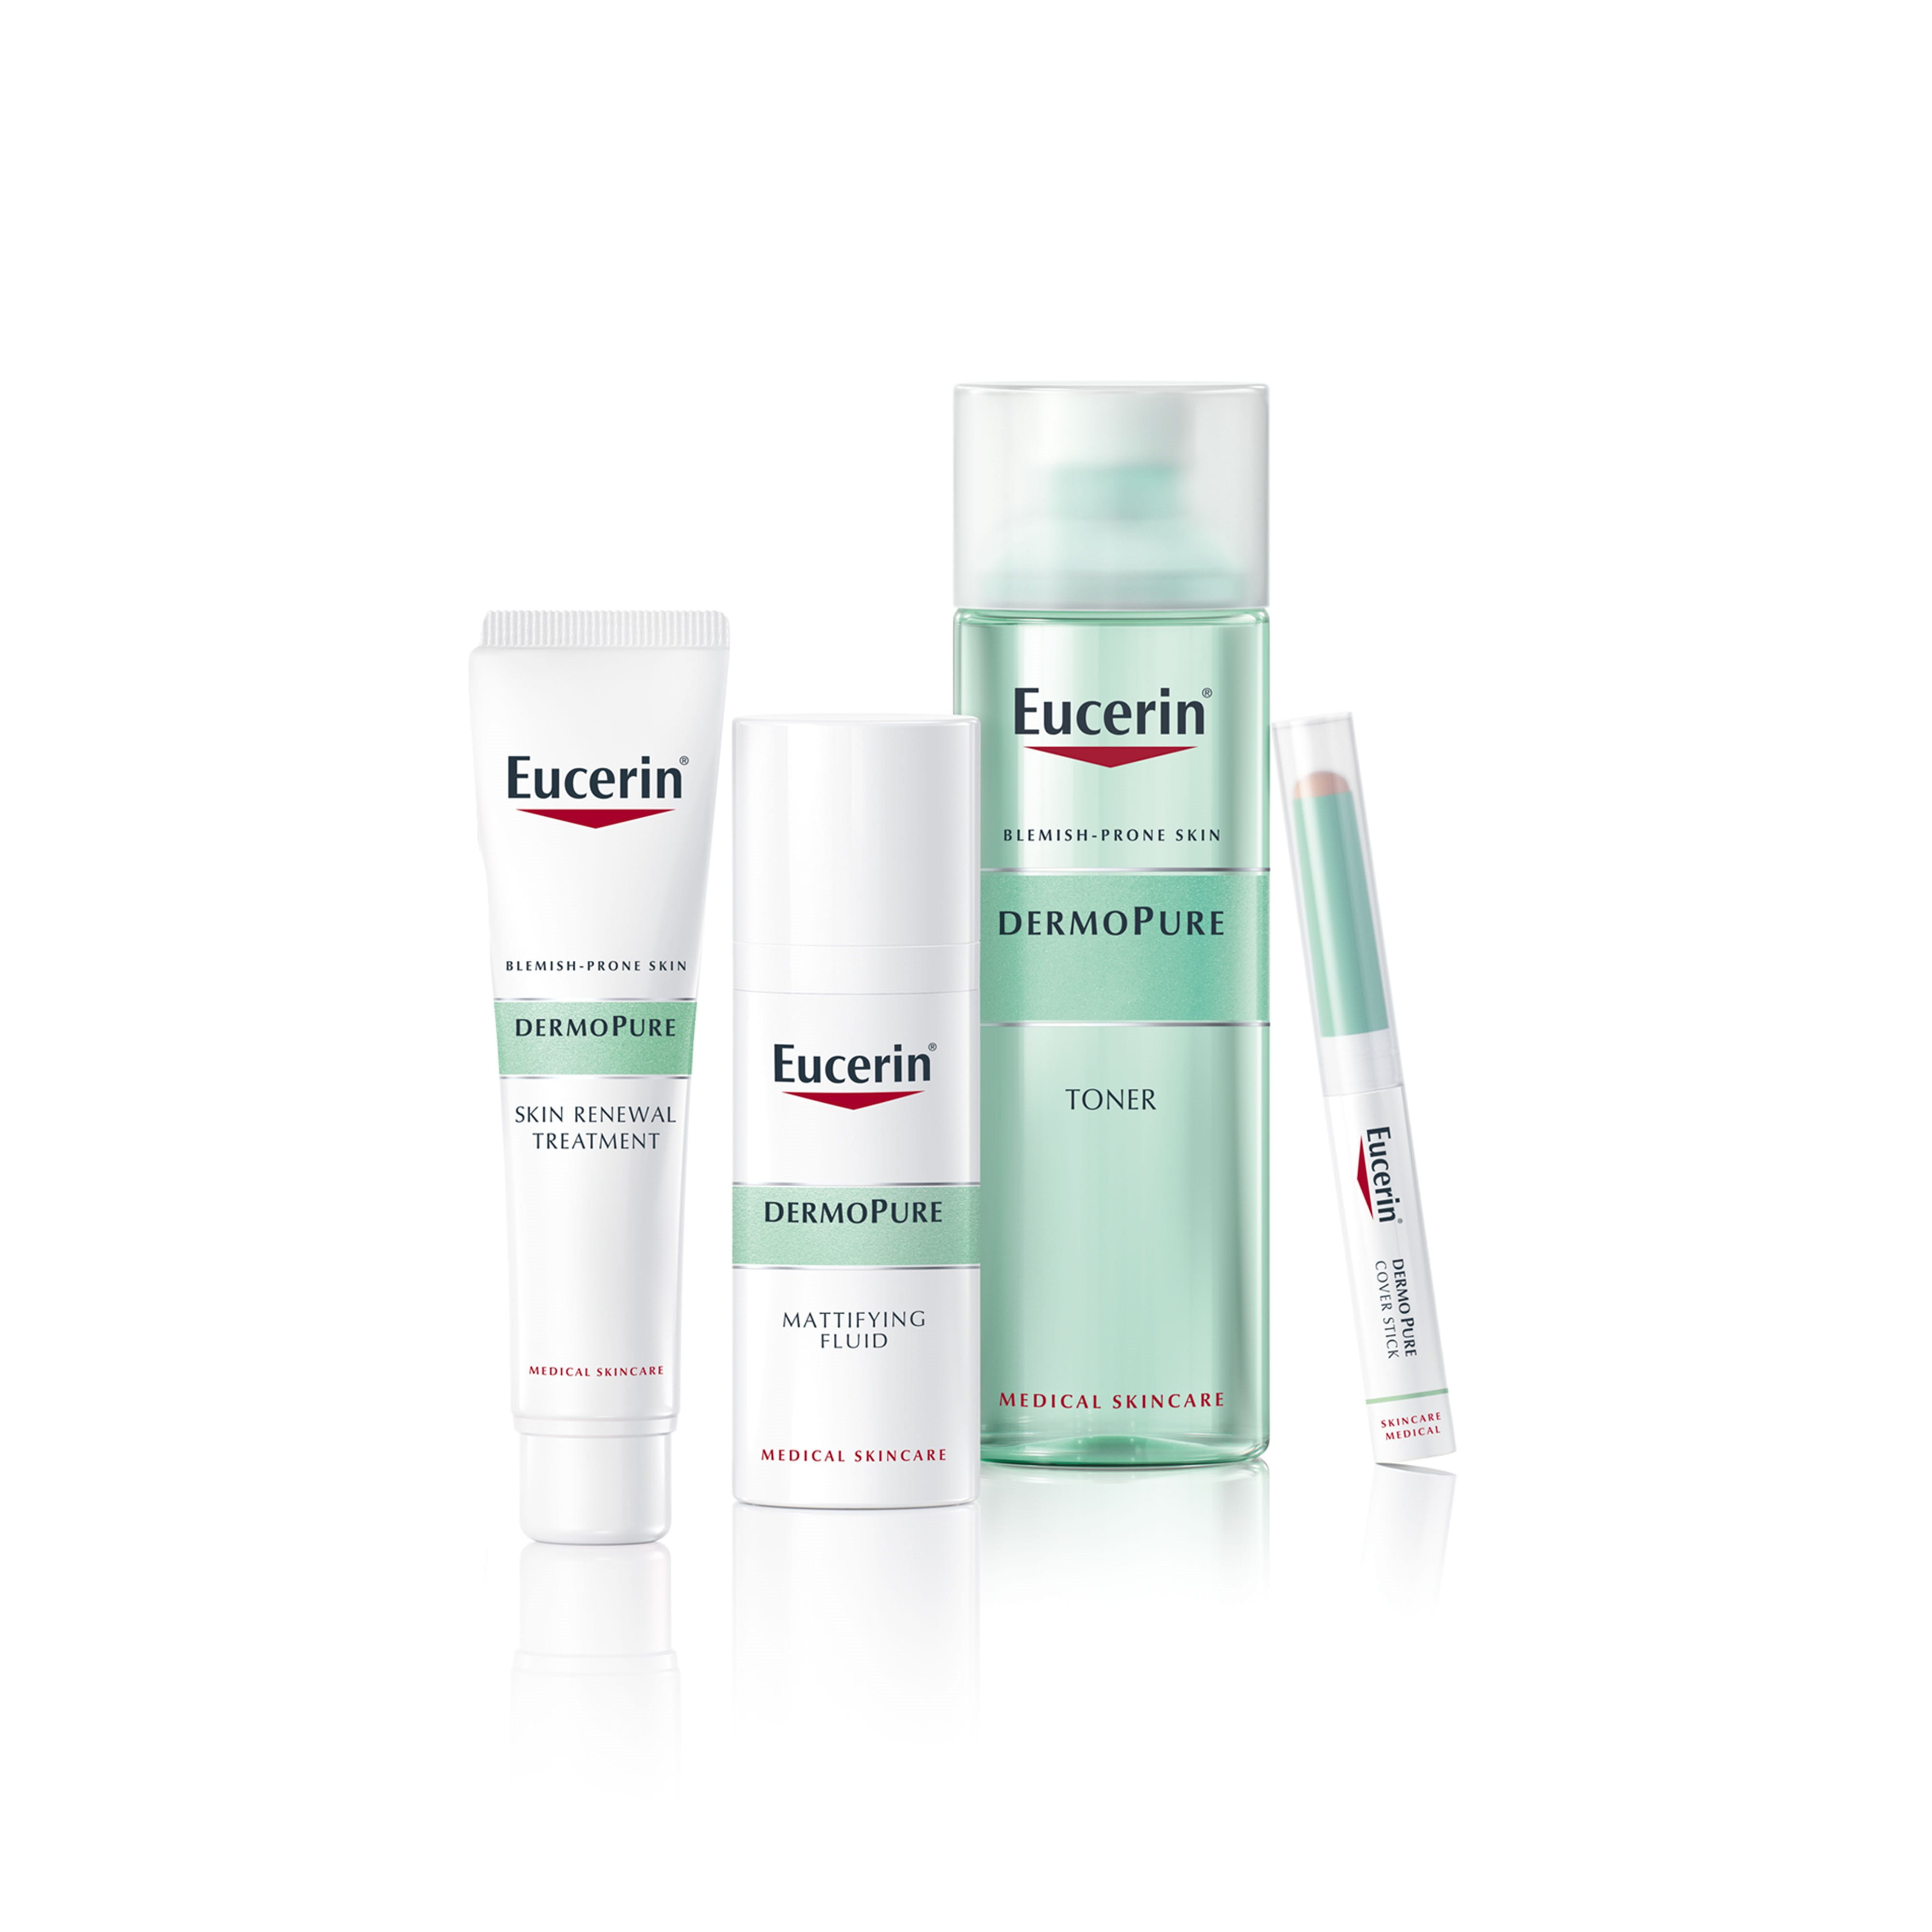 DERMOPURE | care products for acne-prone | Eucerin